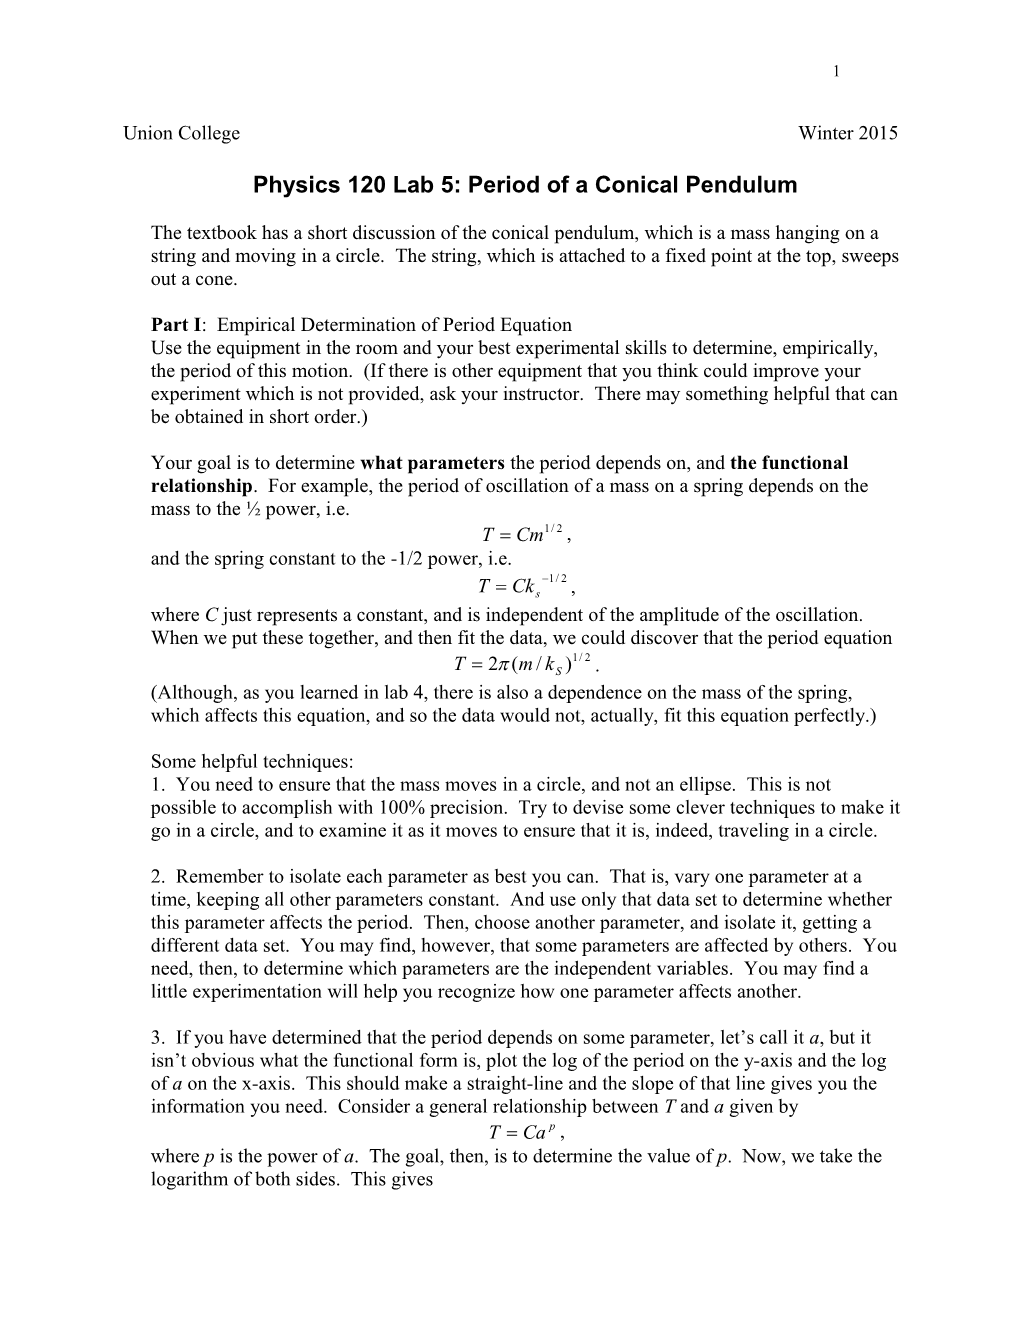 Physics 120 Lab 5: Period of a Conical Pendulum